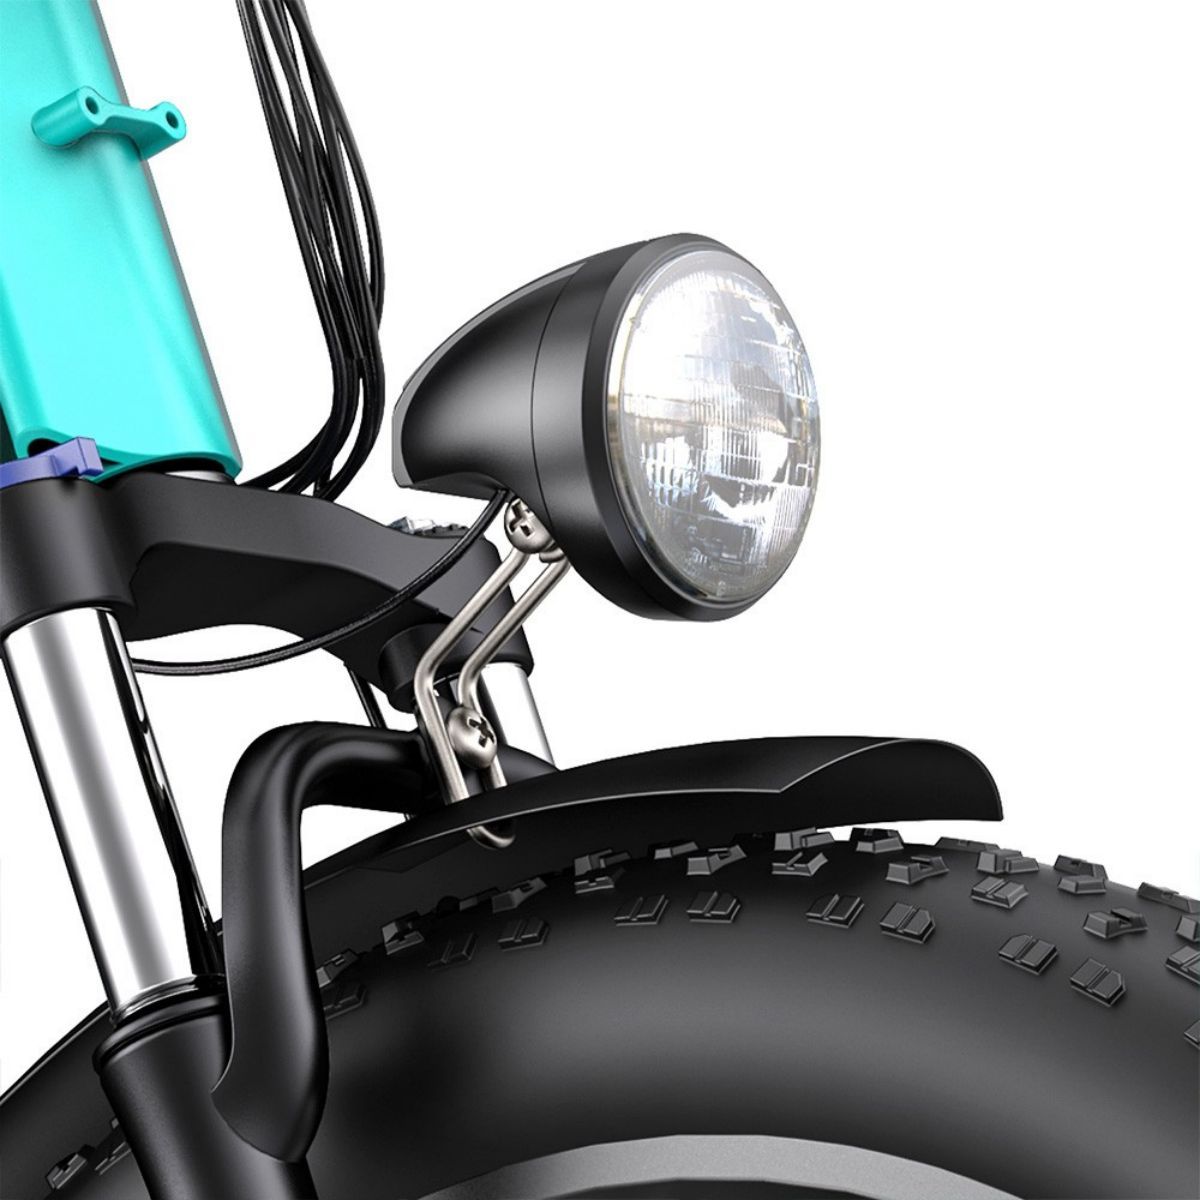 ENGWE E26 Citybike (Laufradgröße: 26 768WH, Zoll, Blau) Erwachsene-Rad